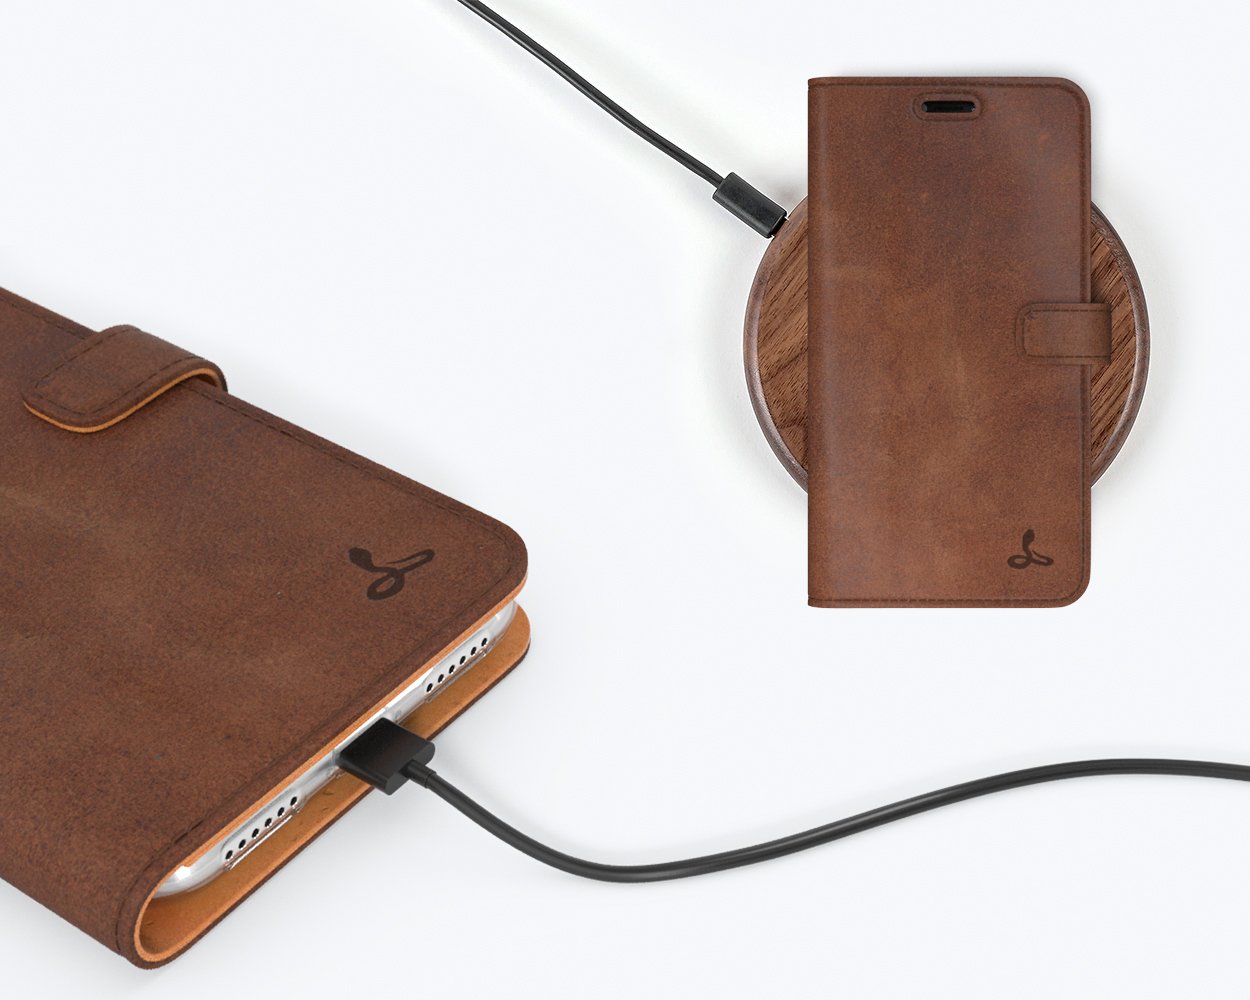 Vintage Leather Wallet - Apple iPhone XR